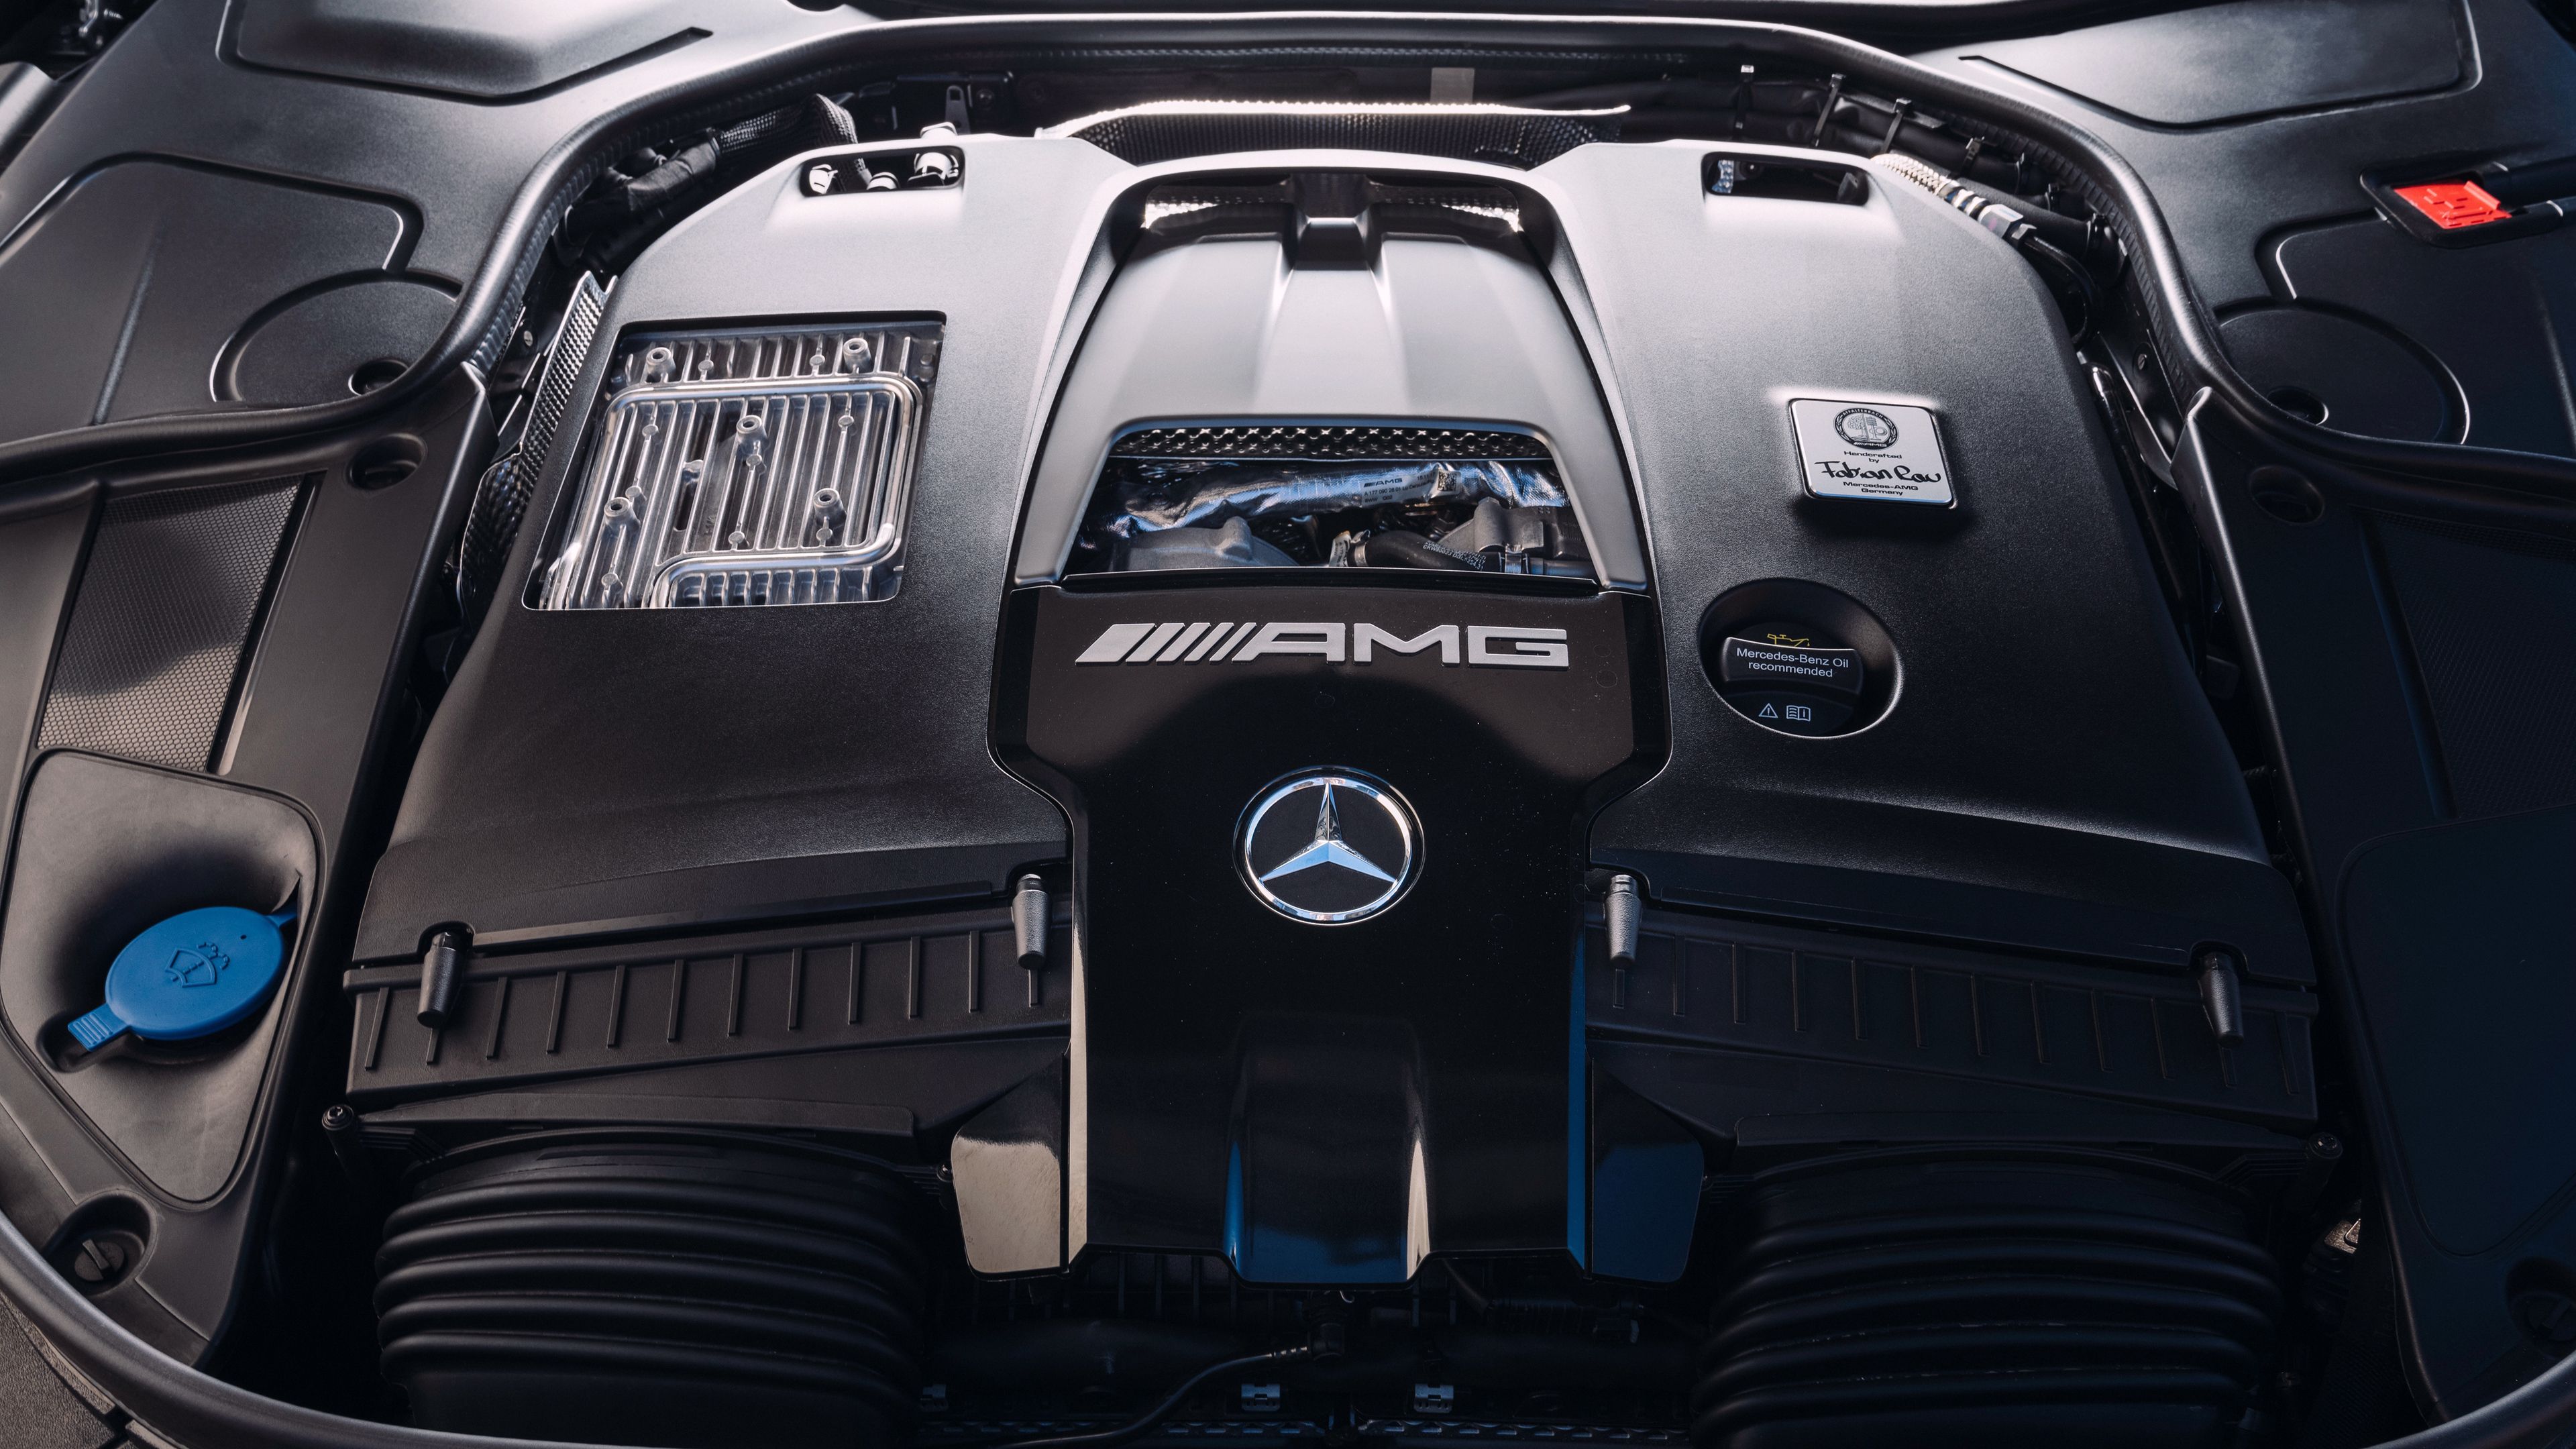 Mercedes AMG S63 2018 Engine View 4k mercedes wallpaper, mercedes s class wallpaper, mercedes benz wallpaper,. Mercedes, Mercedes amg, Mercedes benz wallpaper